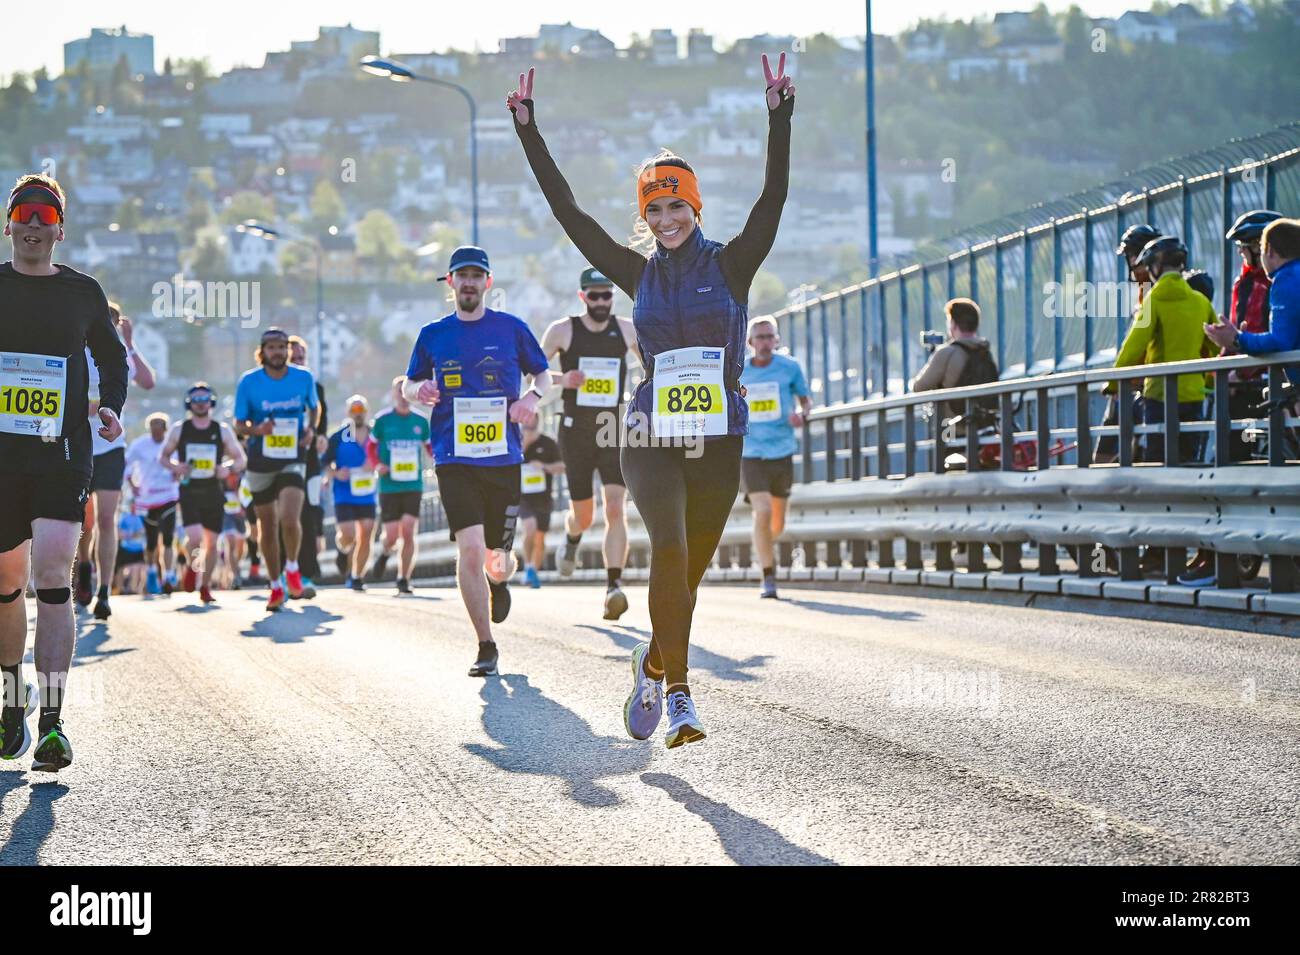 Review: Midnight Sun Marathon-Tromsø, Norway (June 20, 2015)